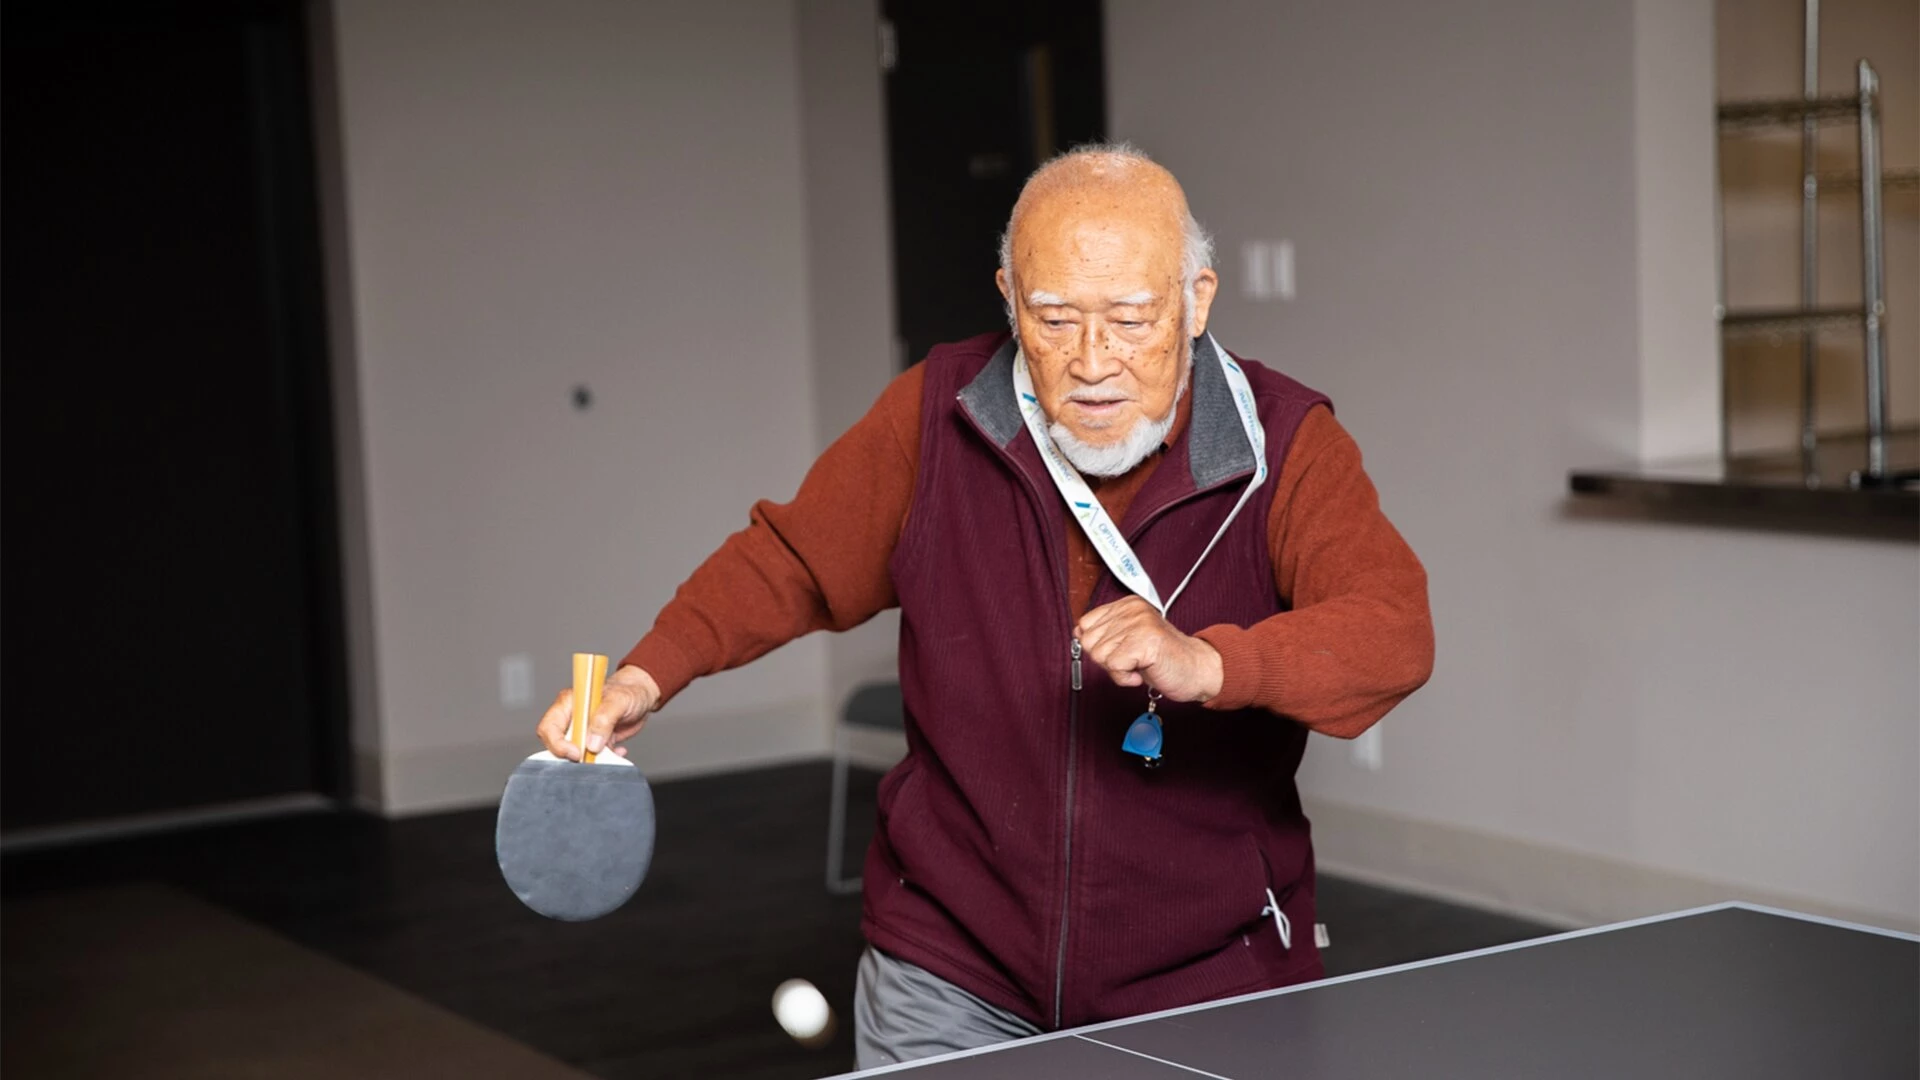 An elderly man playing ping pong, a fun activity for seniors